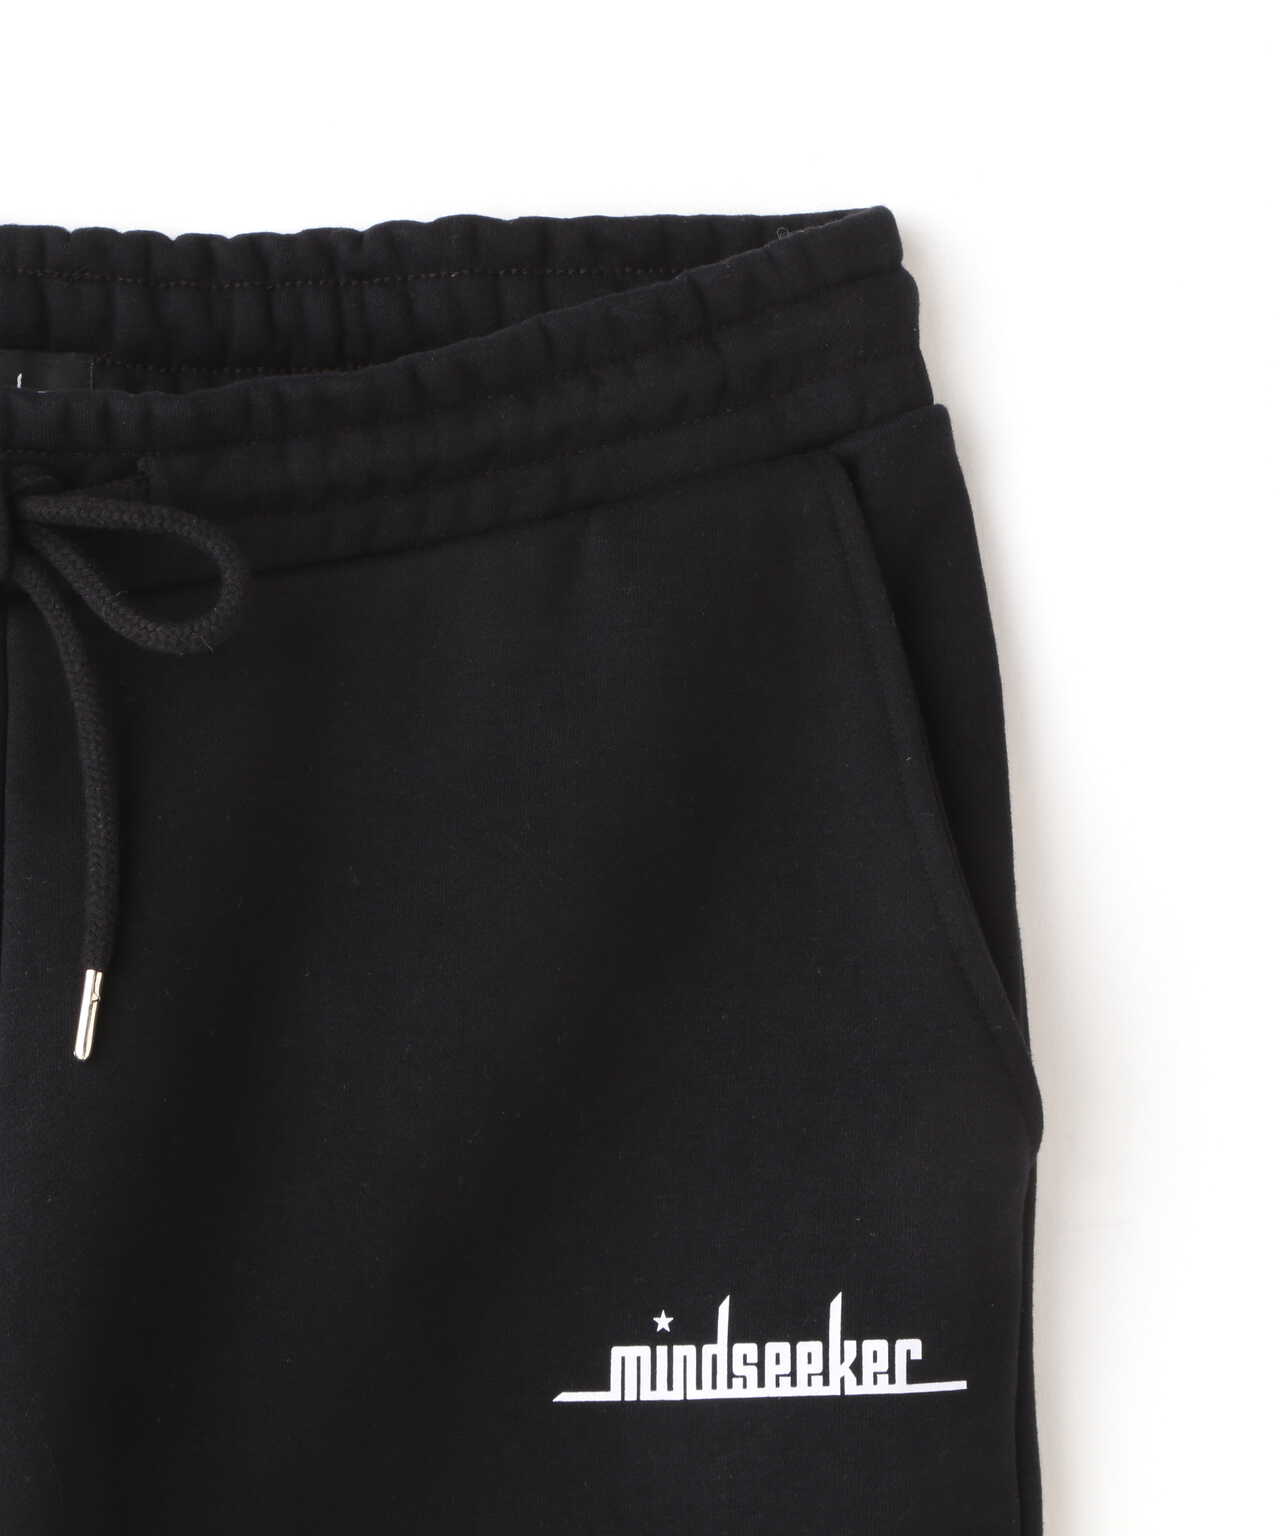 MINDSEEKER/マインドシーカー/Basic Small Logo Pants/ベーシック